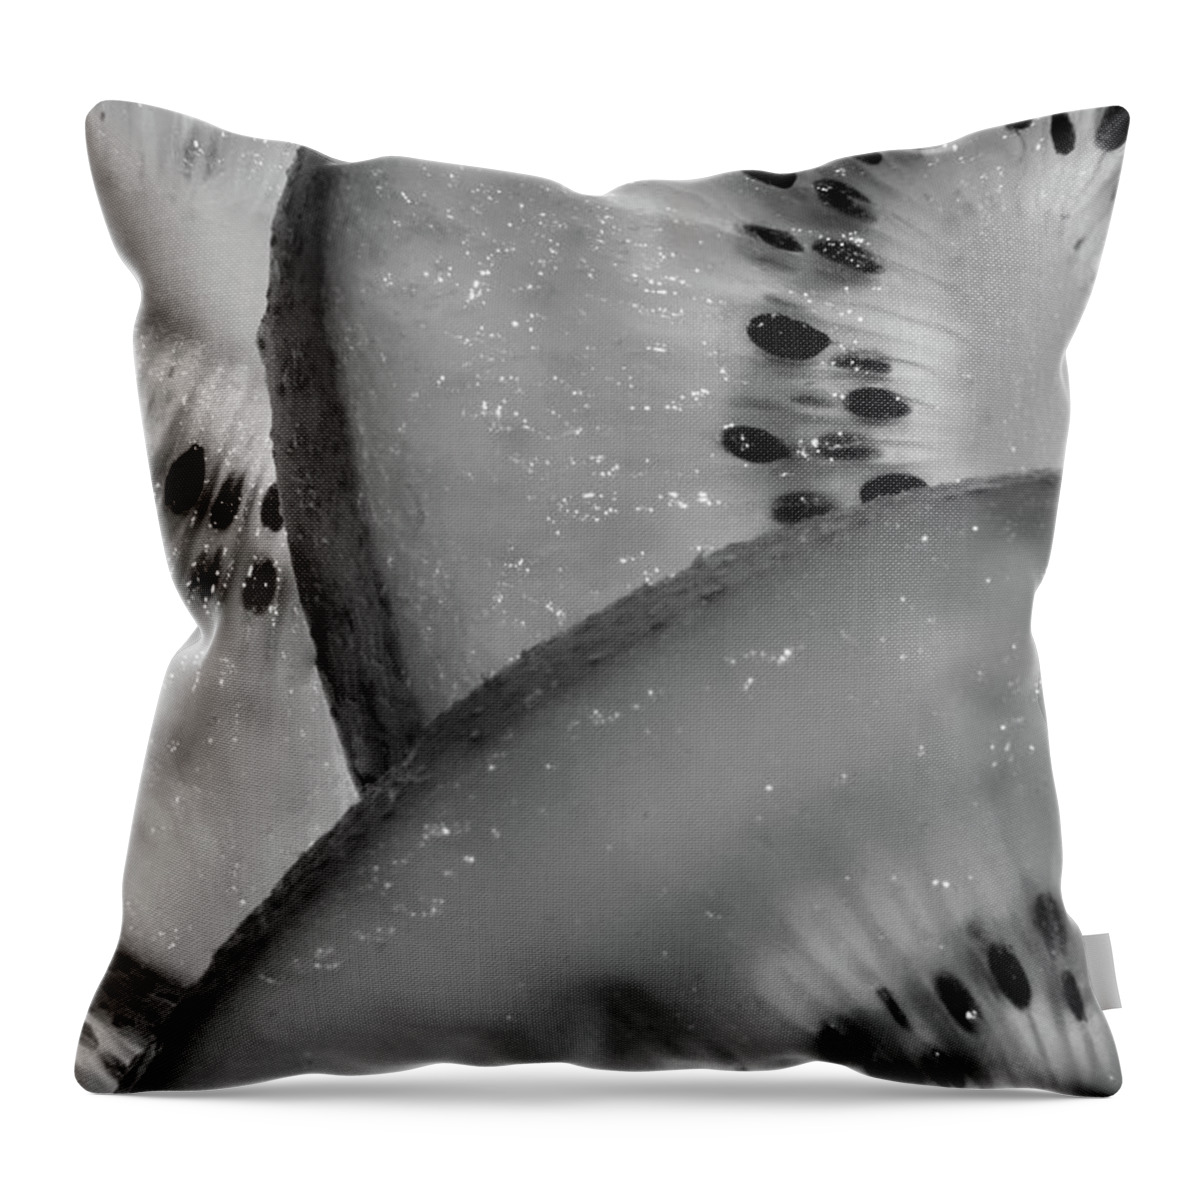 Kiwi Throw Pillow featuring the photograph Kiwi Art by James Woody